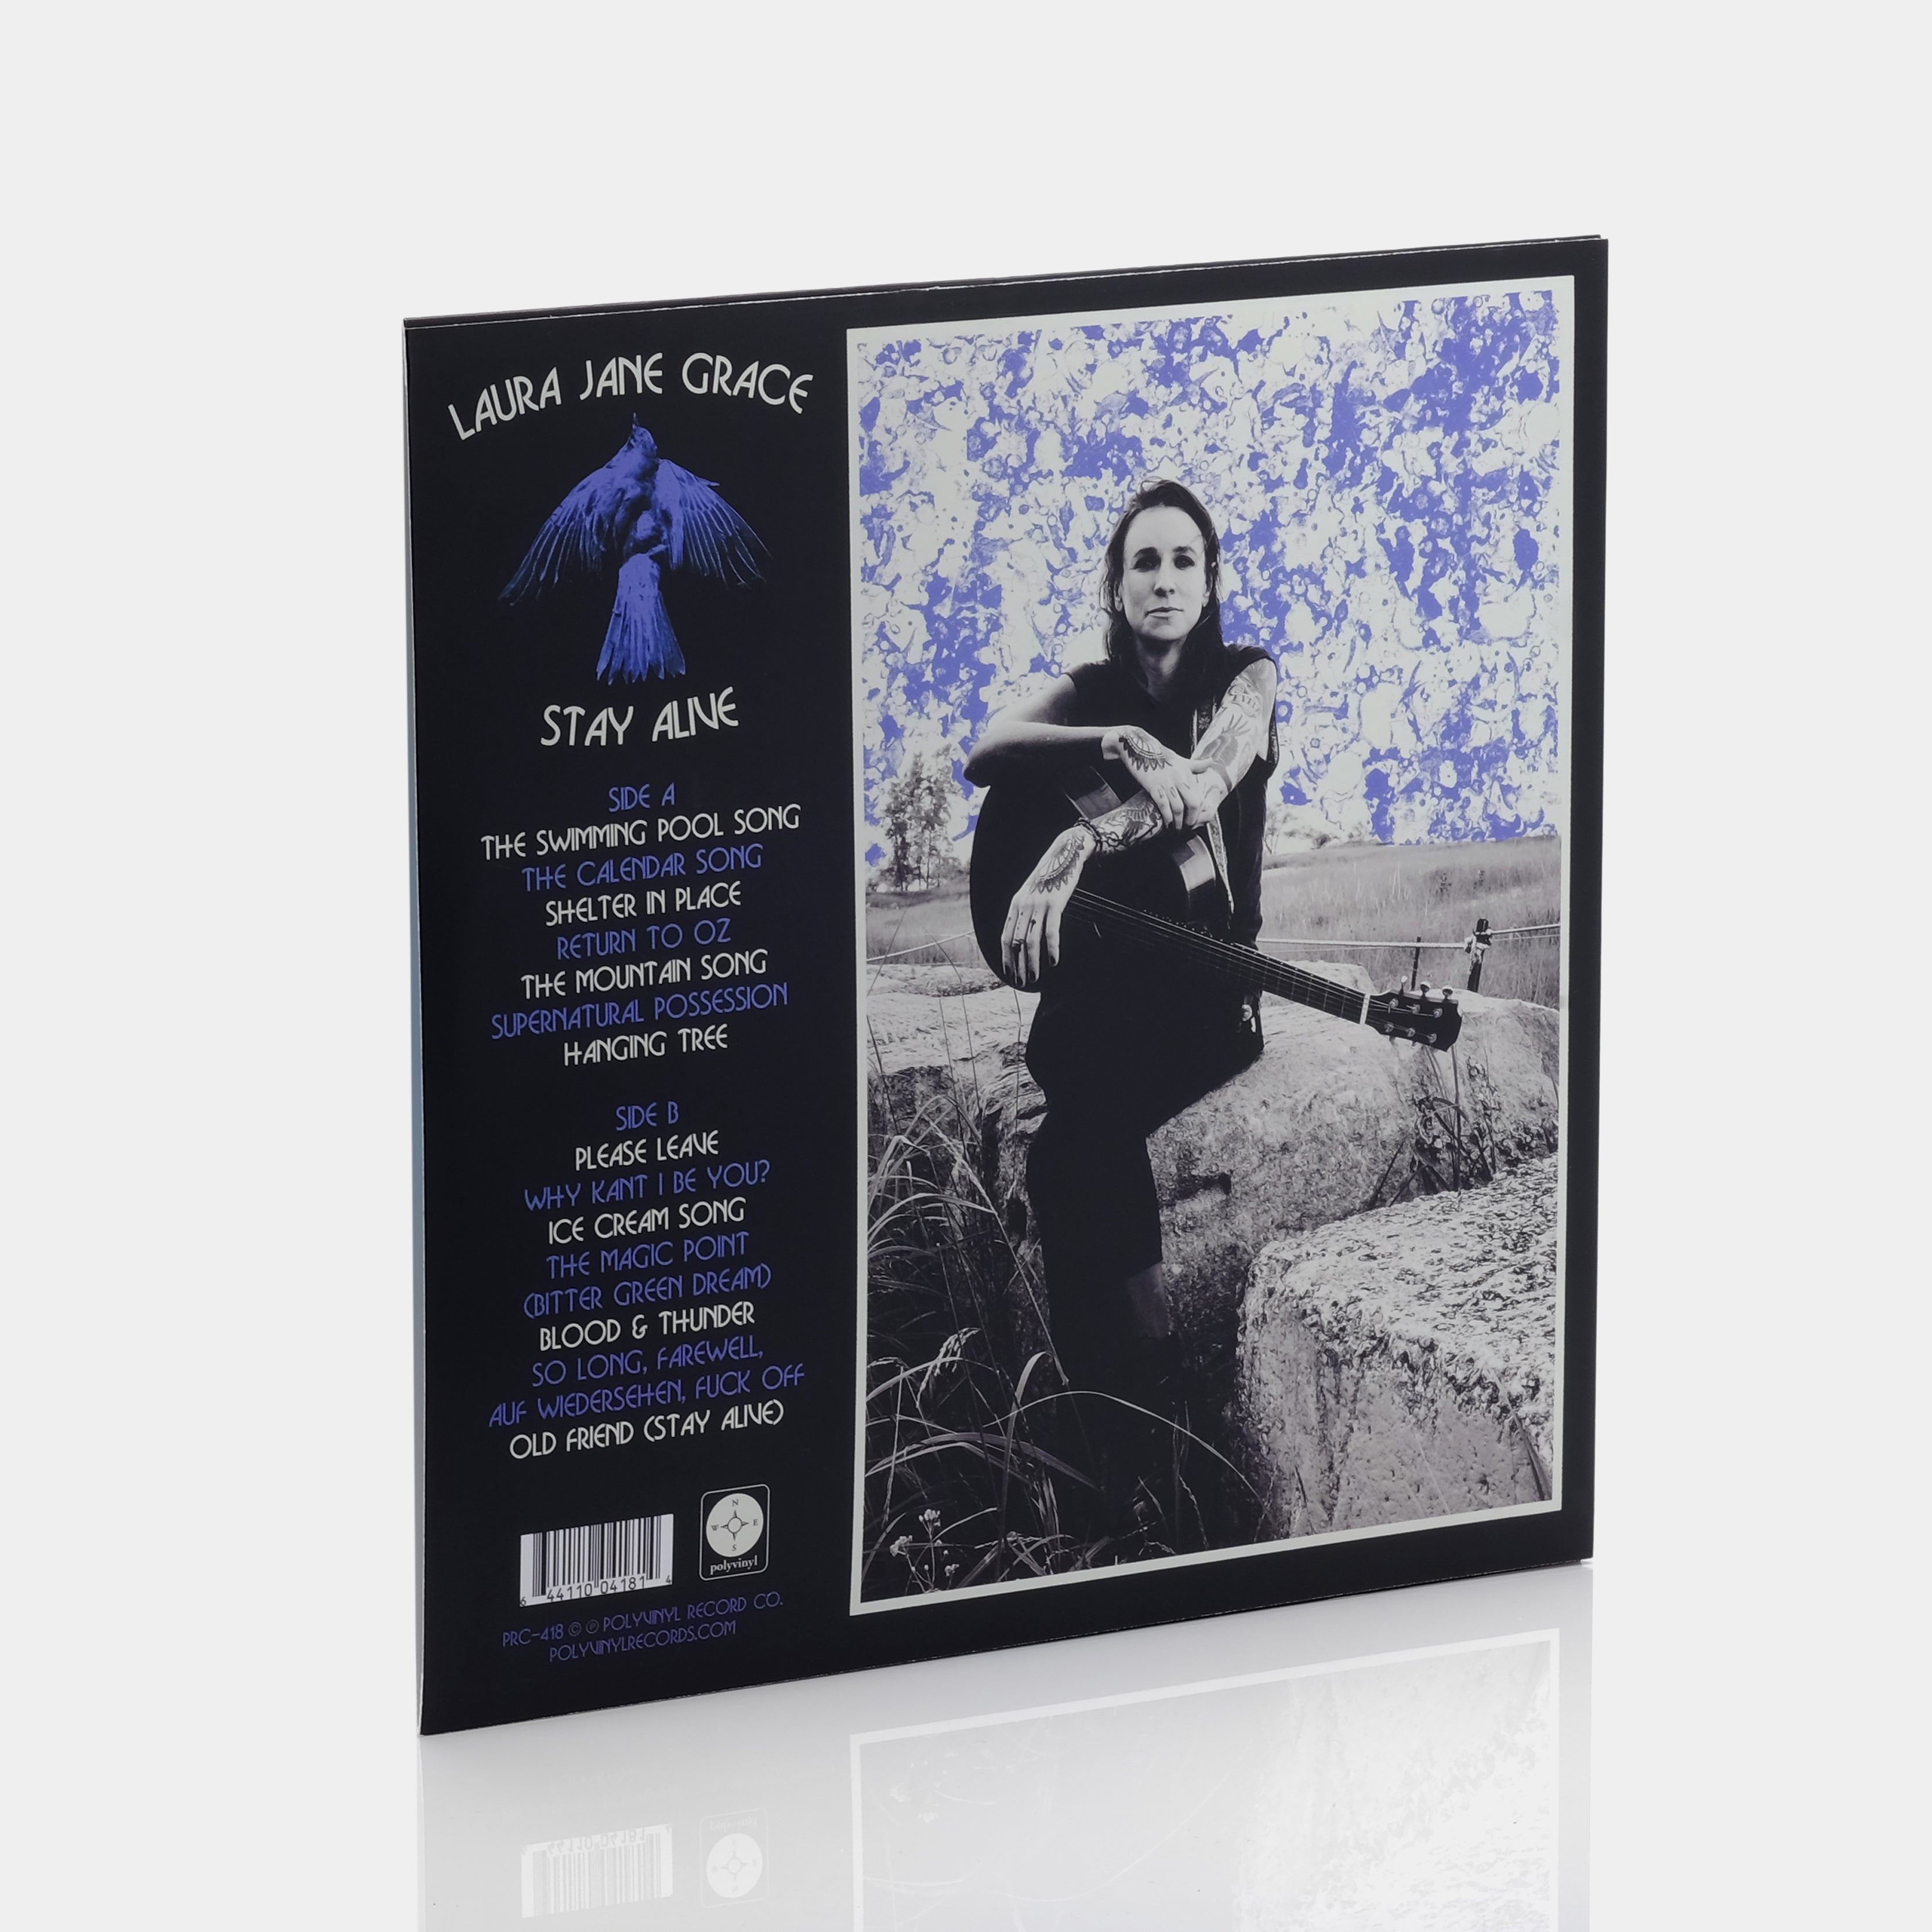 Laura Jane Grace - Stay Alive LP Blue Vinyl Record